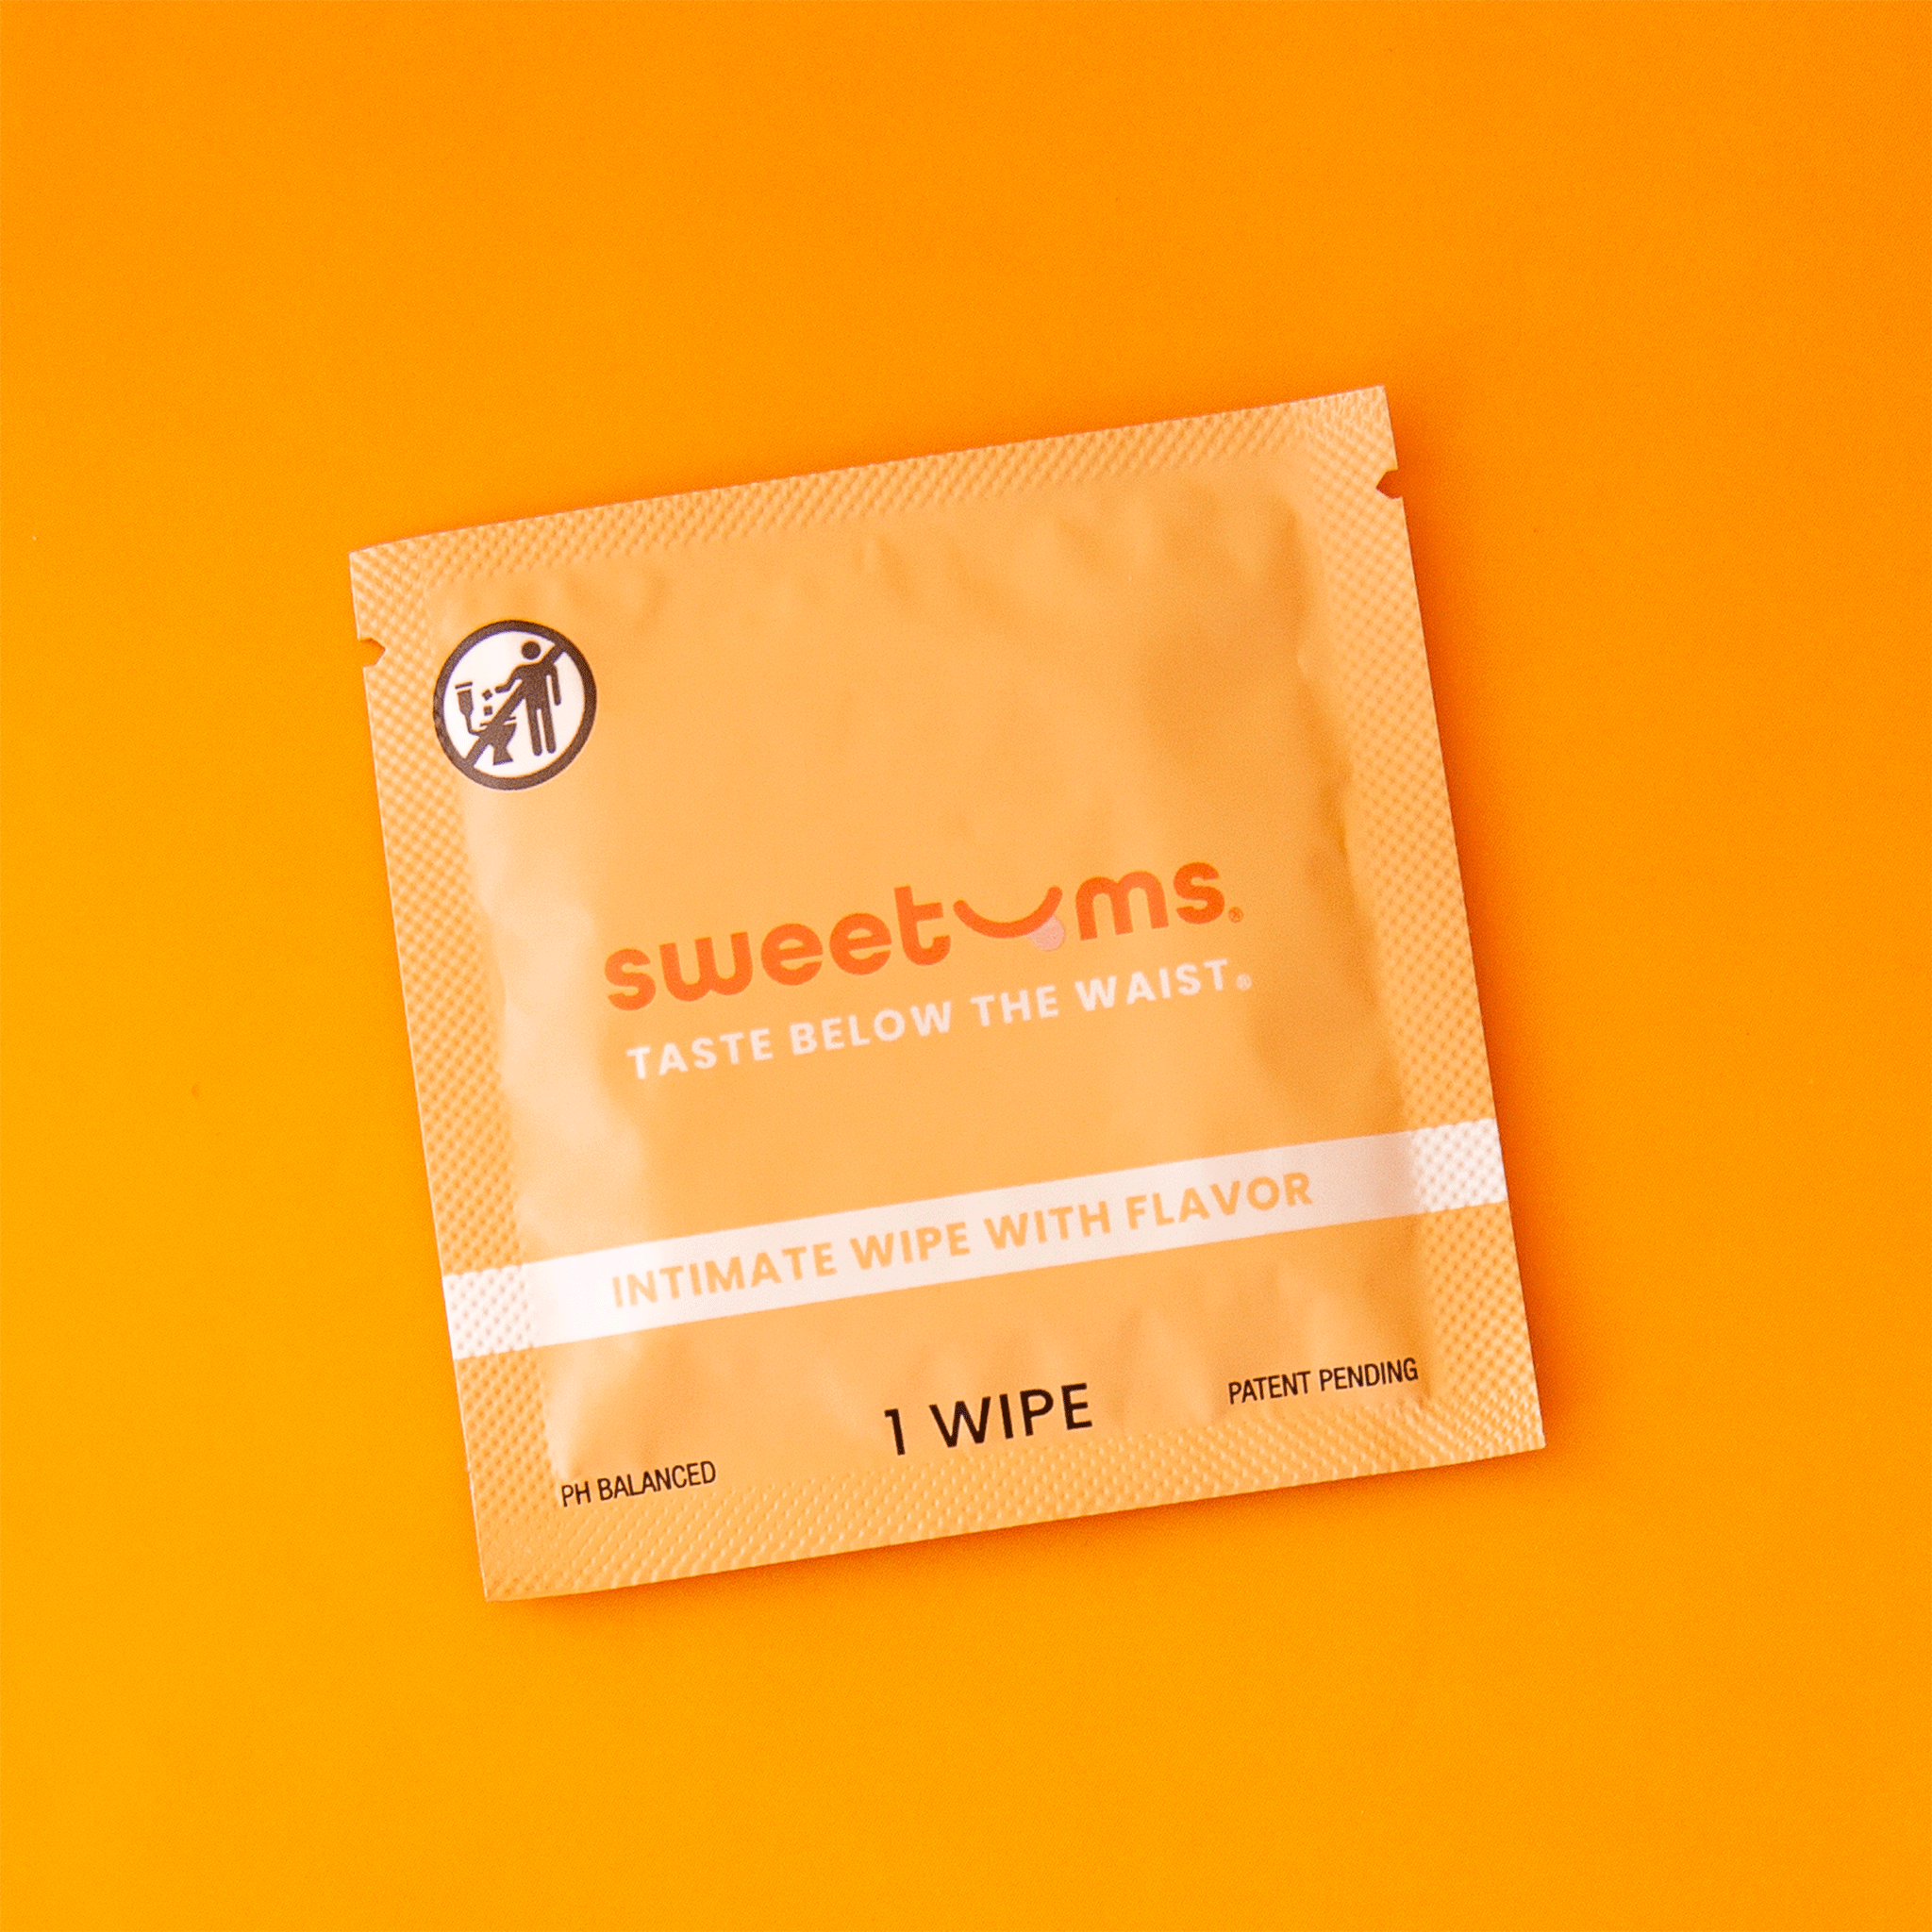 On an orange background is an orange packet of a single use feminine wipe. 